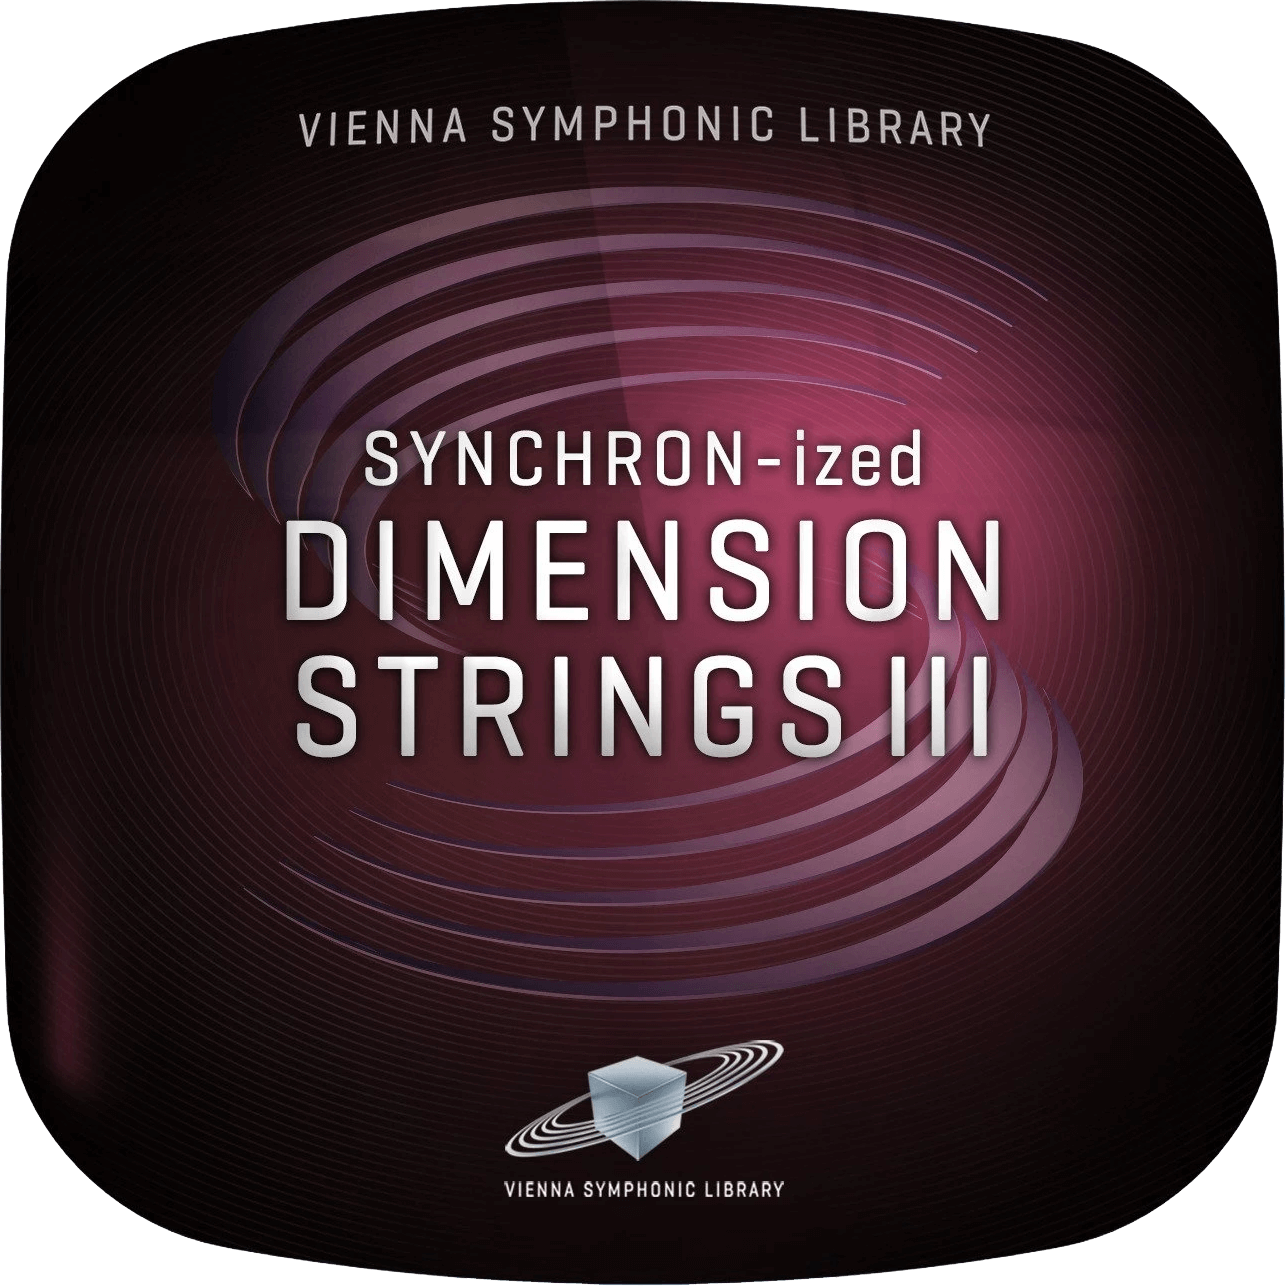 VSL Synchron-ized Dimension Strings III